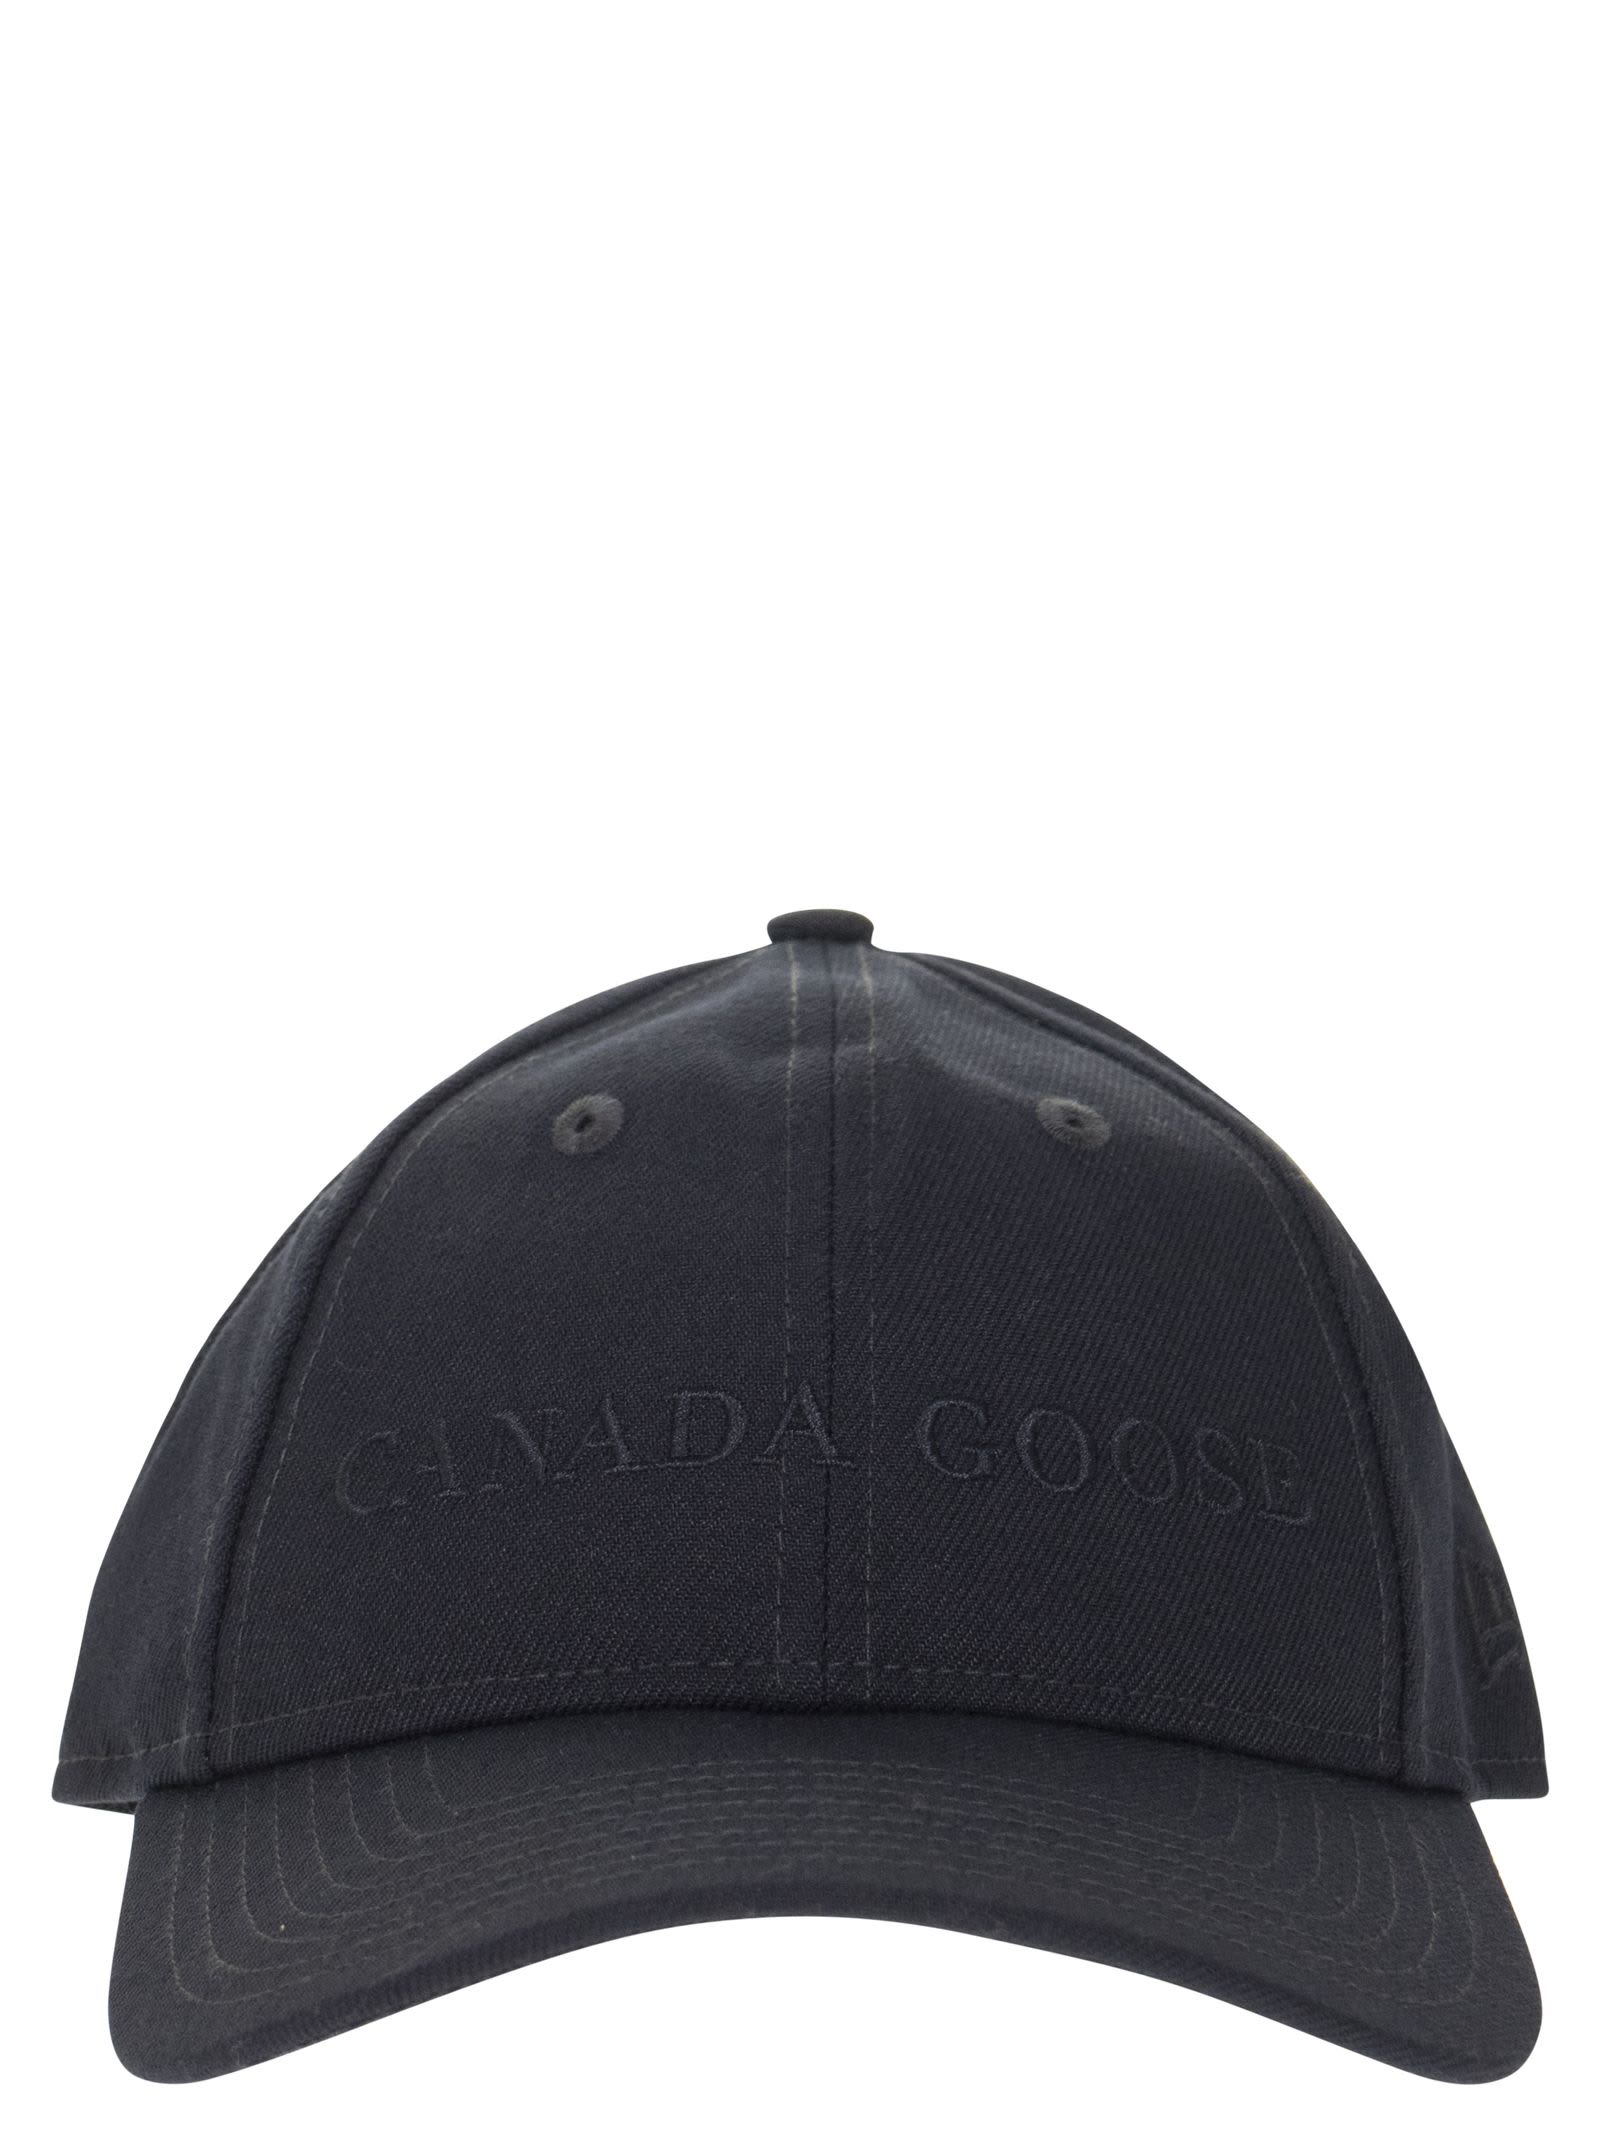 Canada Goose Wordmark - Adjustable Hat